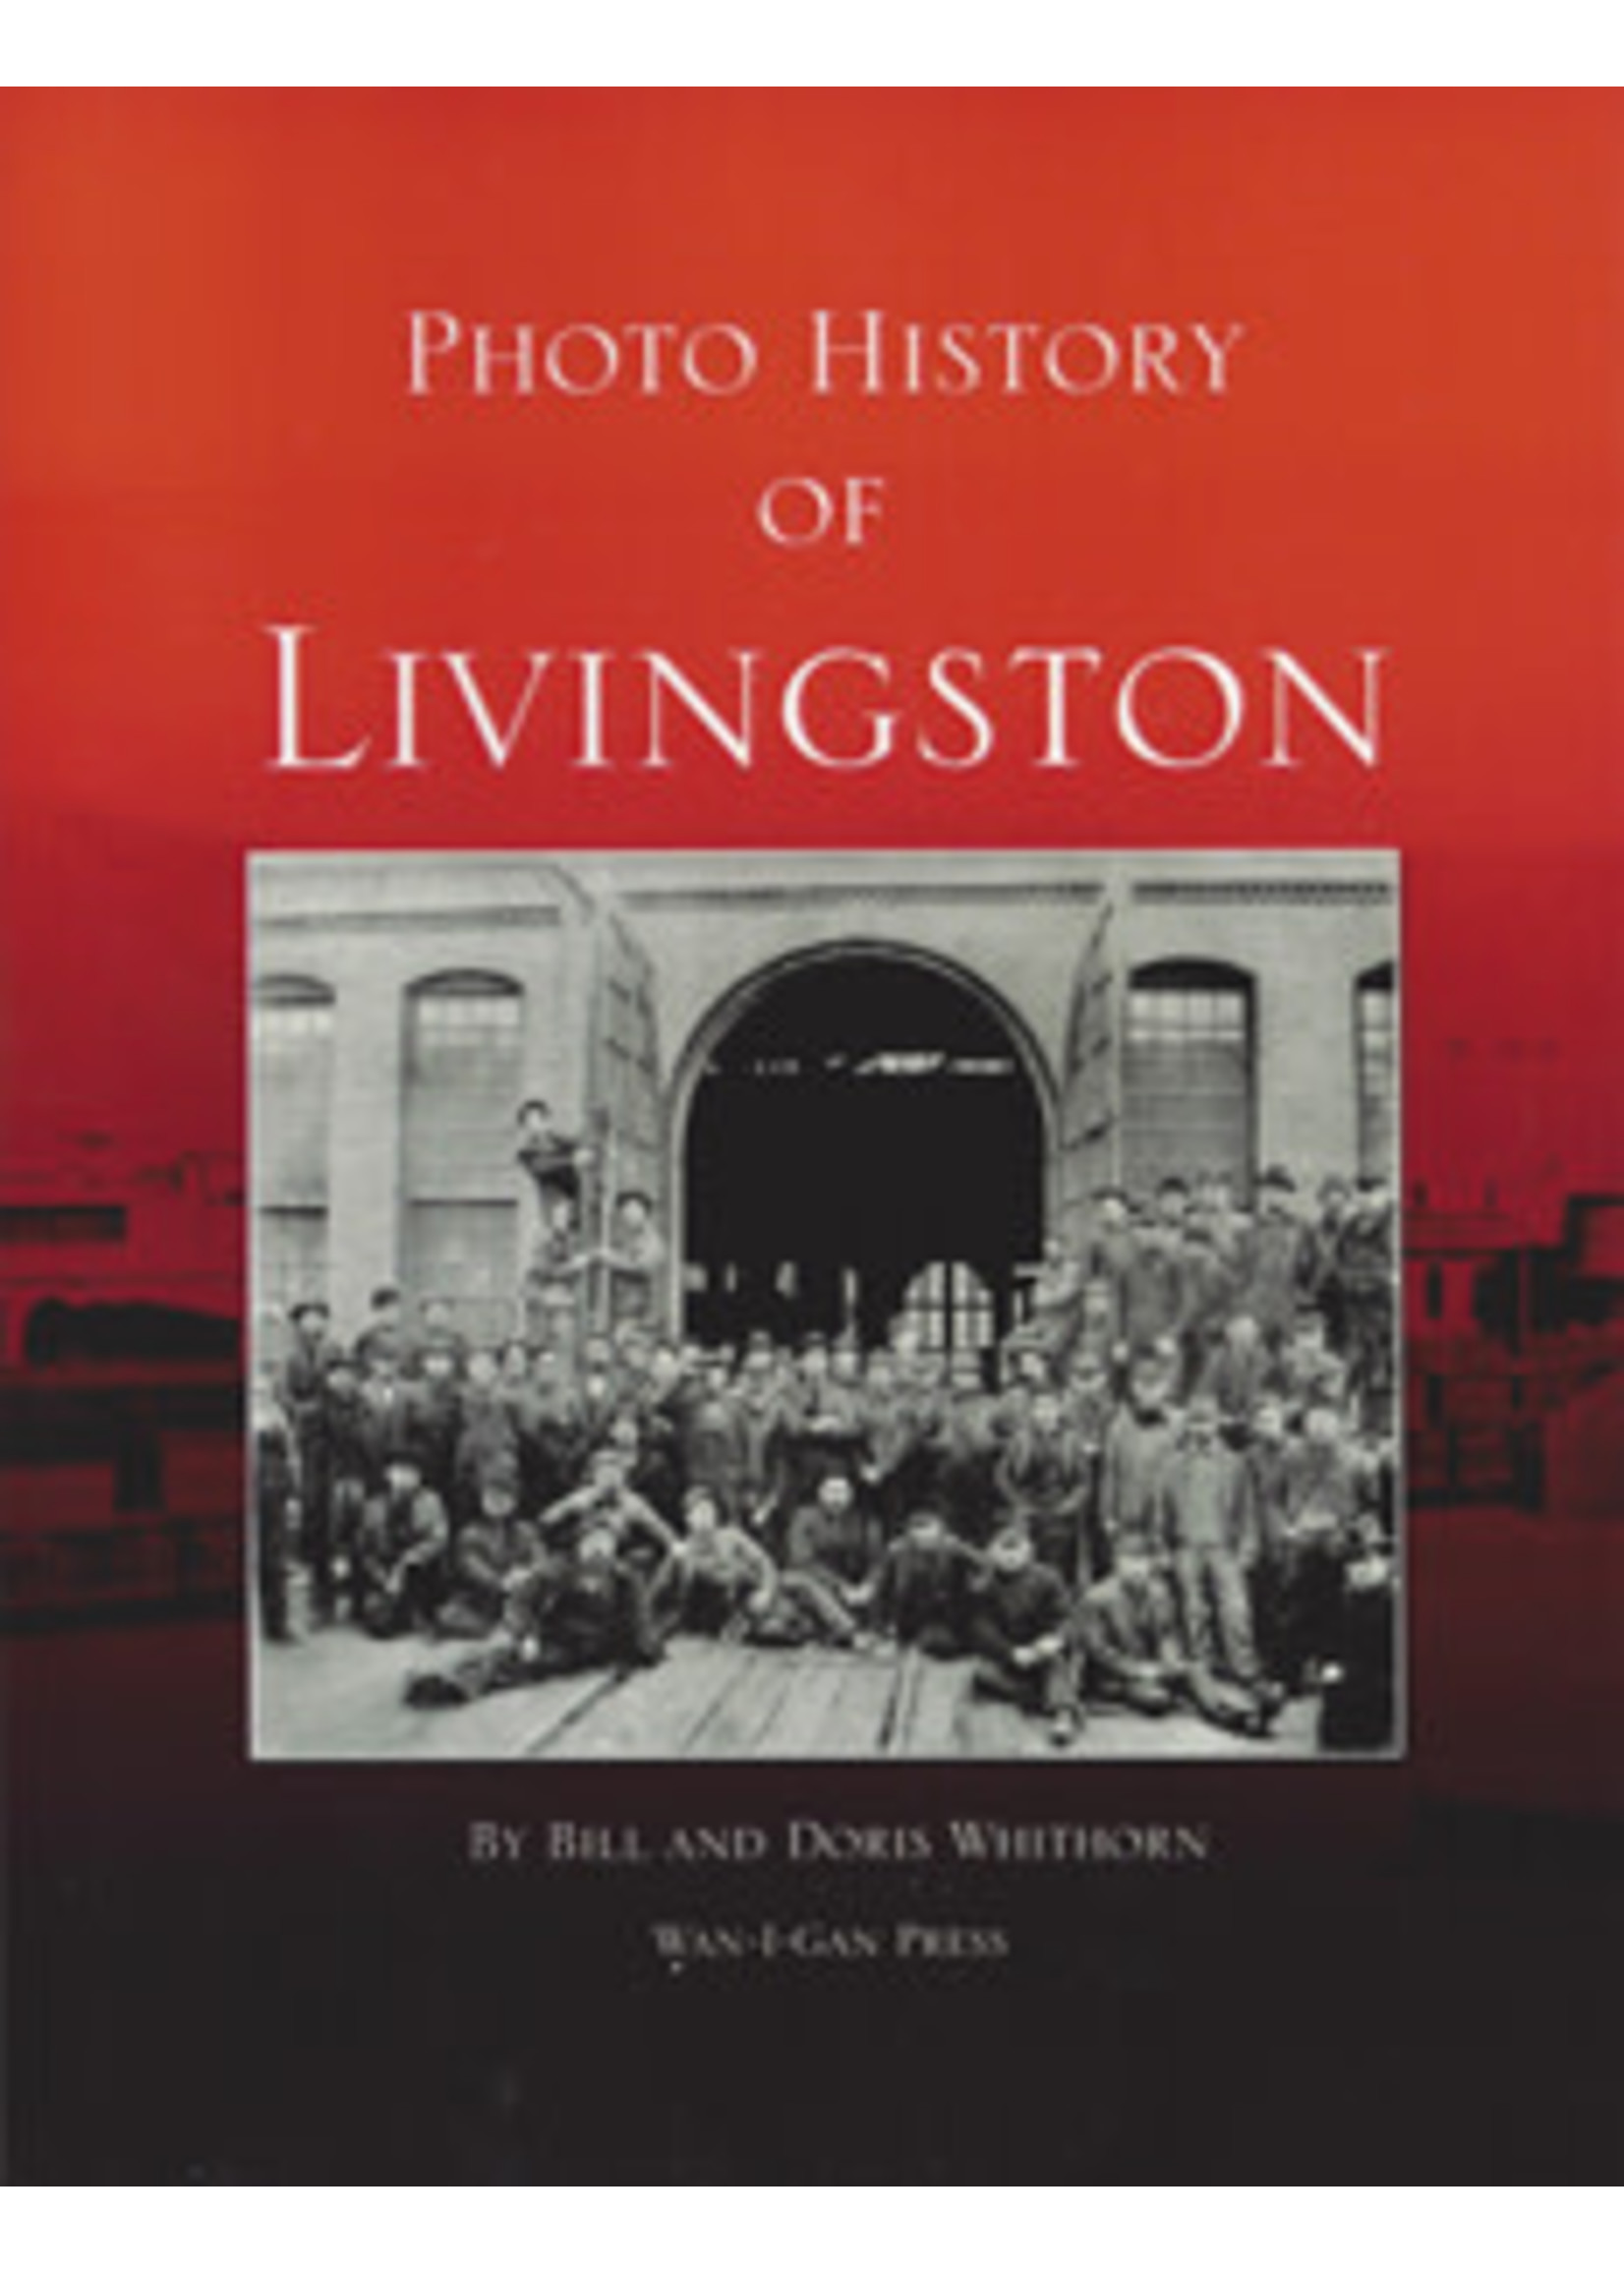 Wan-I-Gan Photo History of Livingston